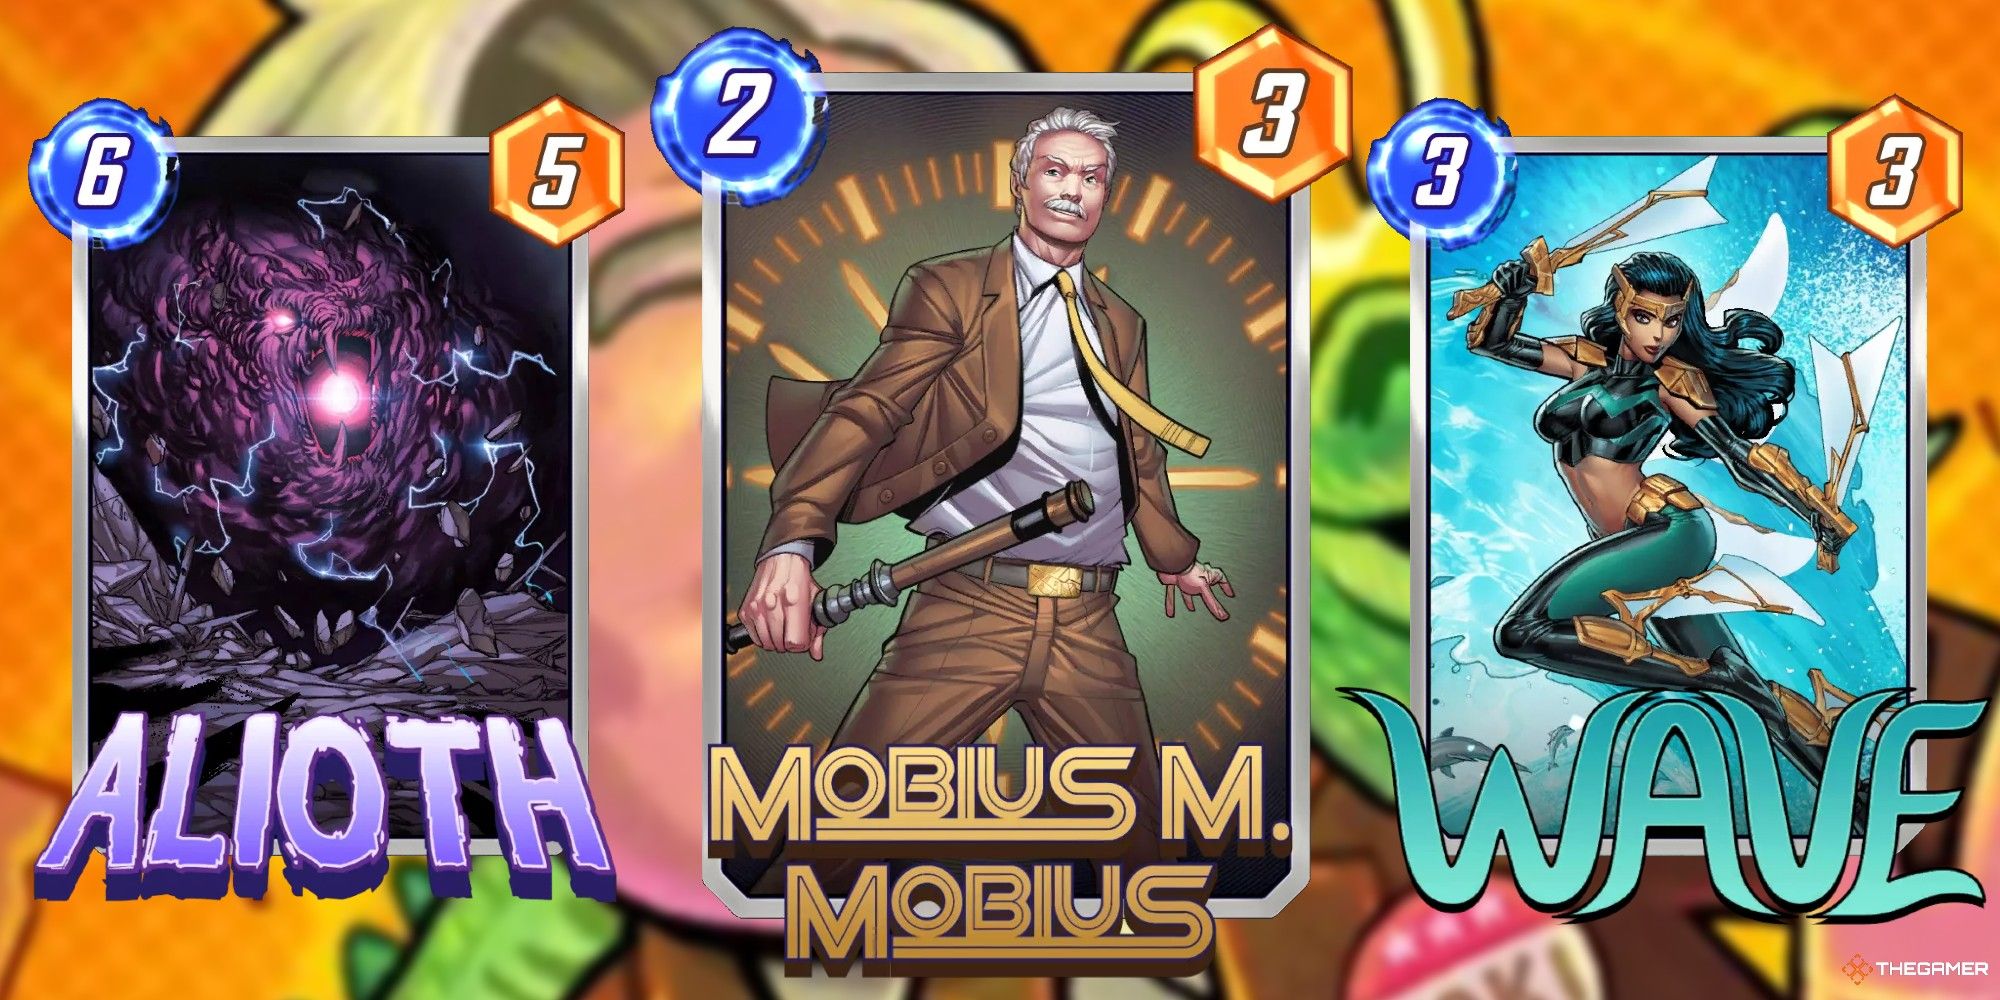 Marvel Snap Cards Alioth Mobius M. Mobius Wave